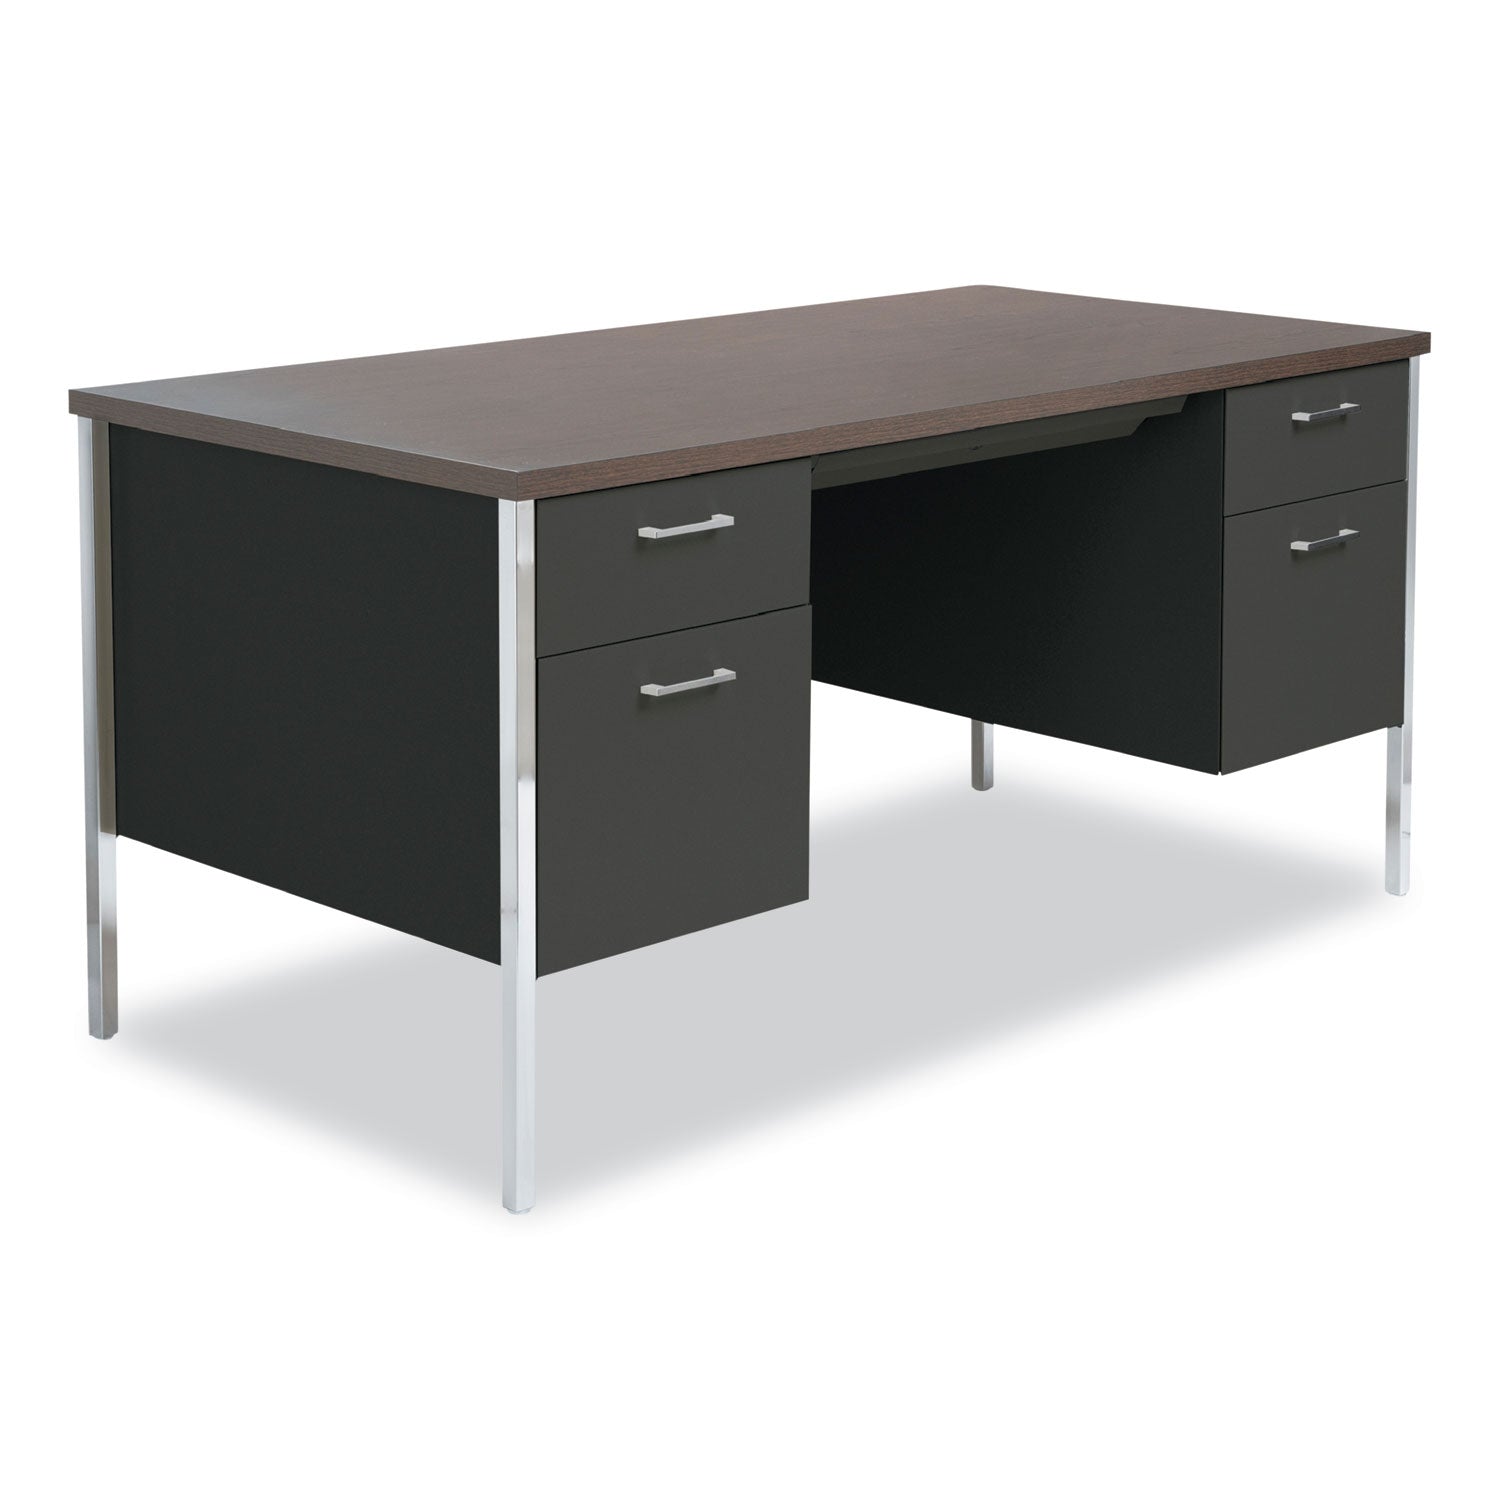 double-pedestal-steel-desk-60-x-30-x-295-mocha-black-chrome-plated-legs_alesd6030bm - 1